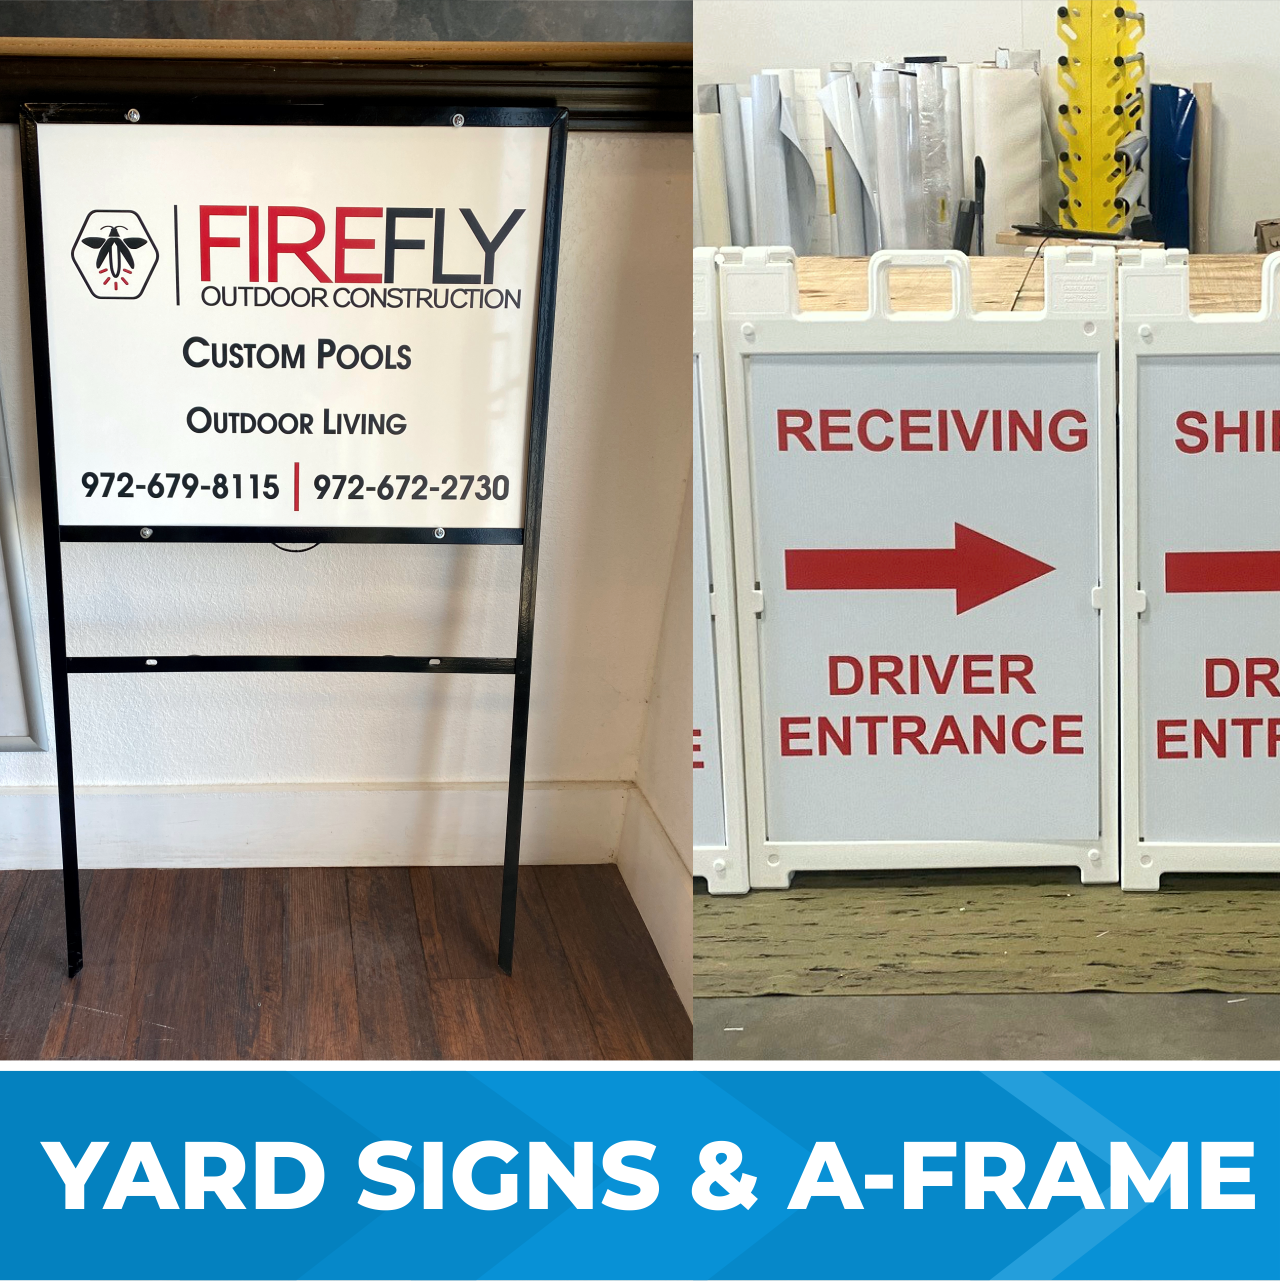 Yard Signs & A-Frame